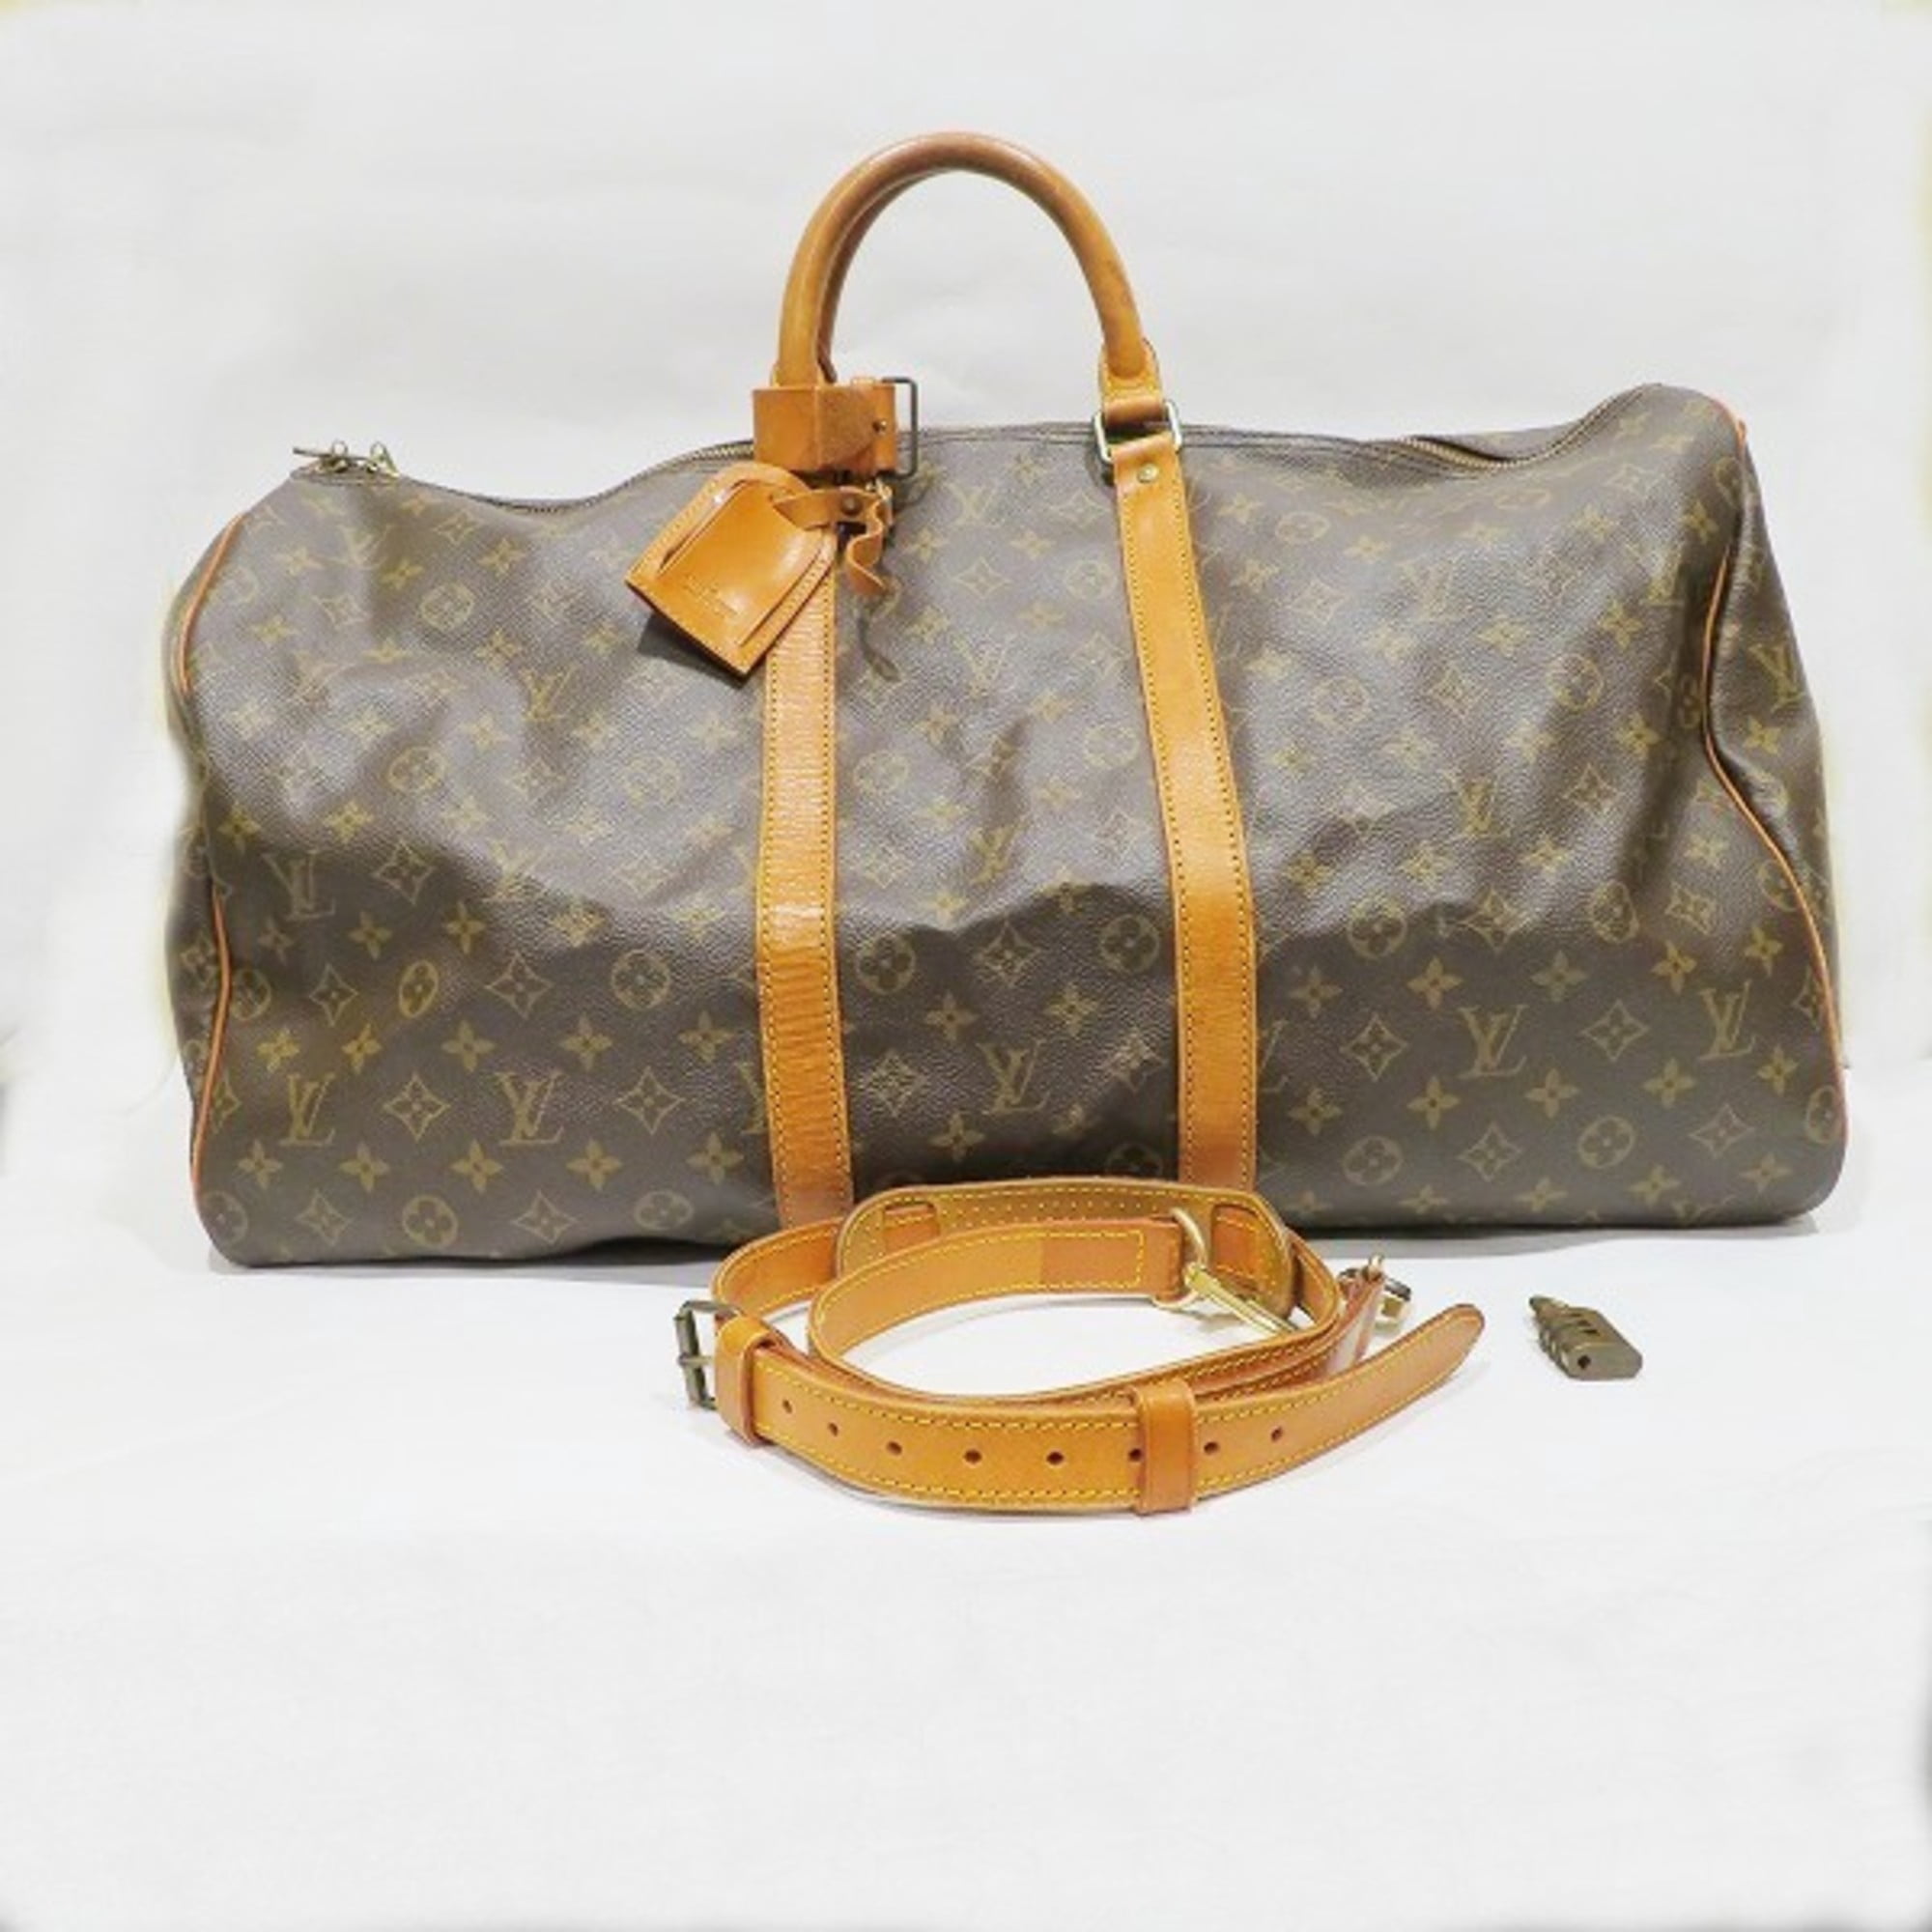 Authentic Louis Vuitton Boston Bag Keepall Bandouliere 55 Monogram M41414